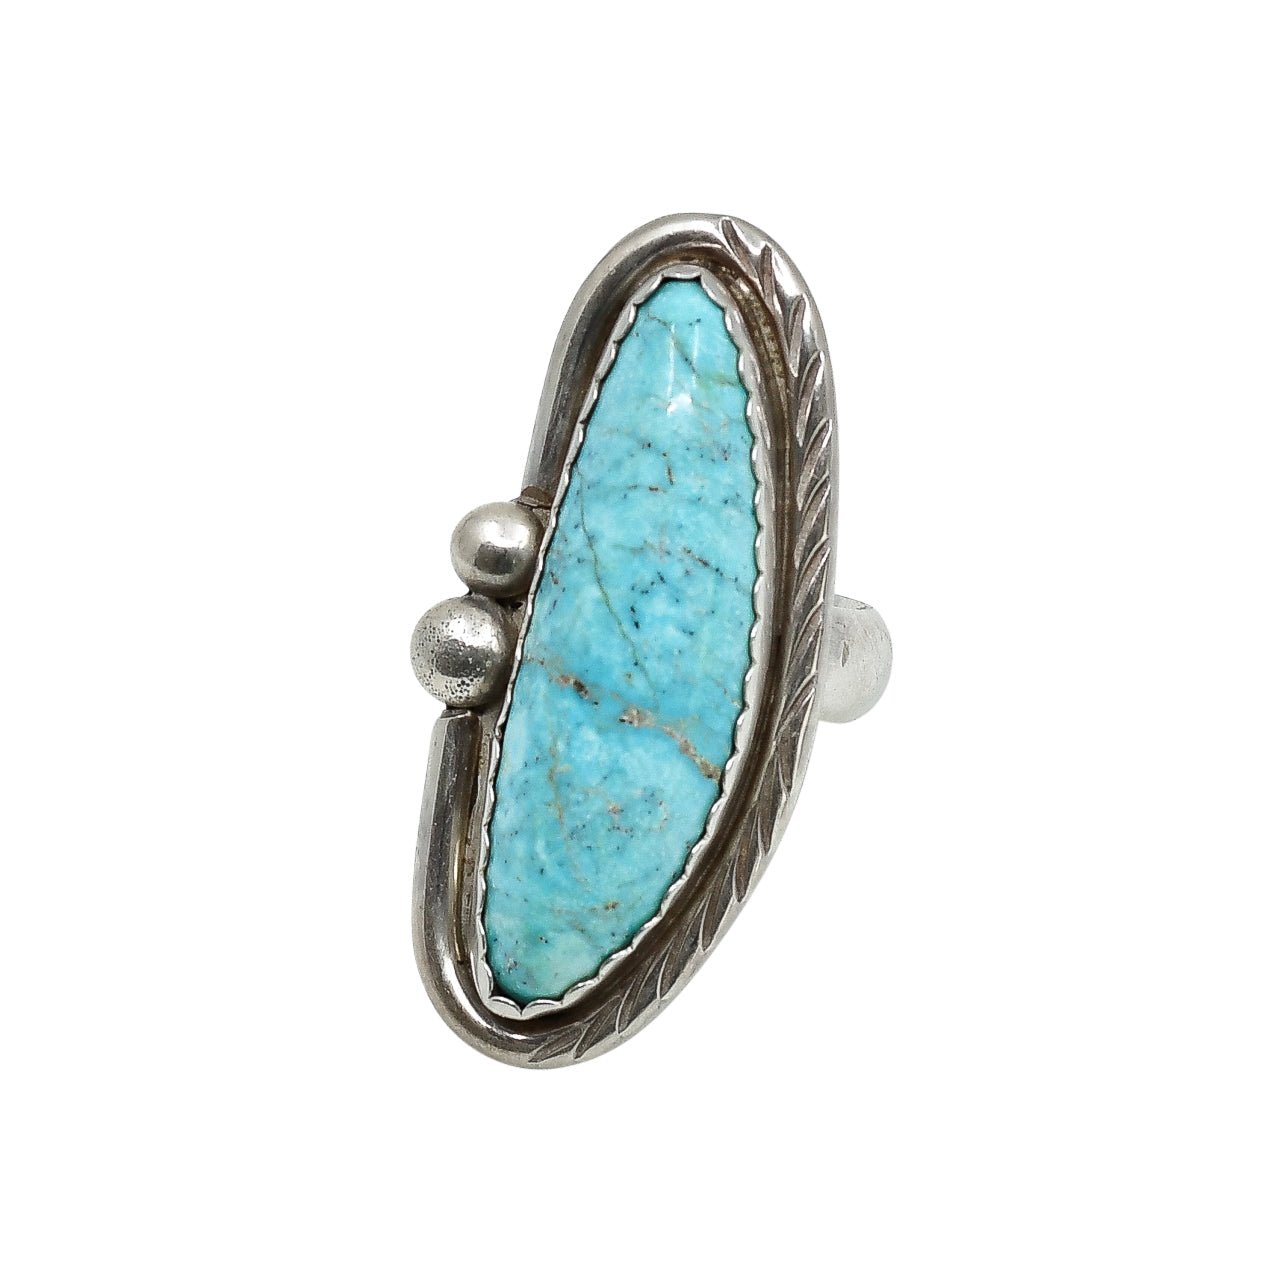 Vintage Navajo Ring With Elongated Turquoise Stone - Turquoise & Tufa